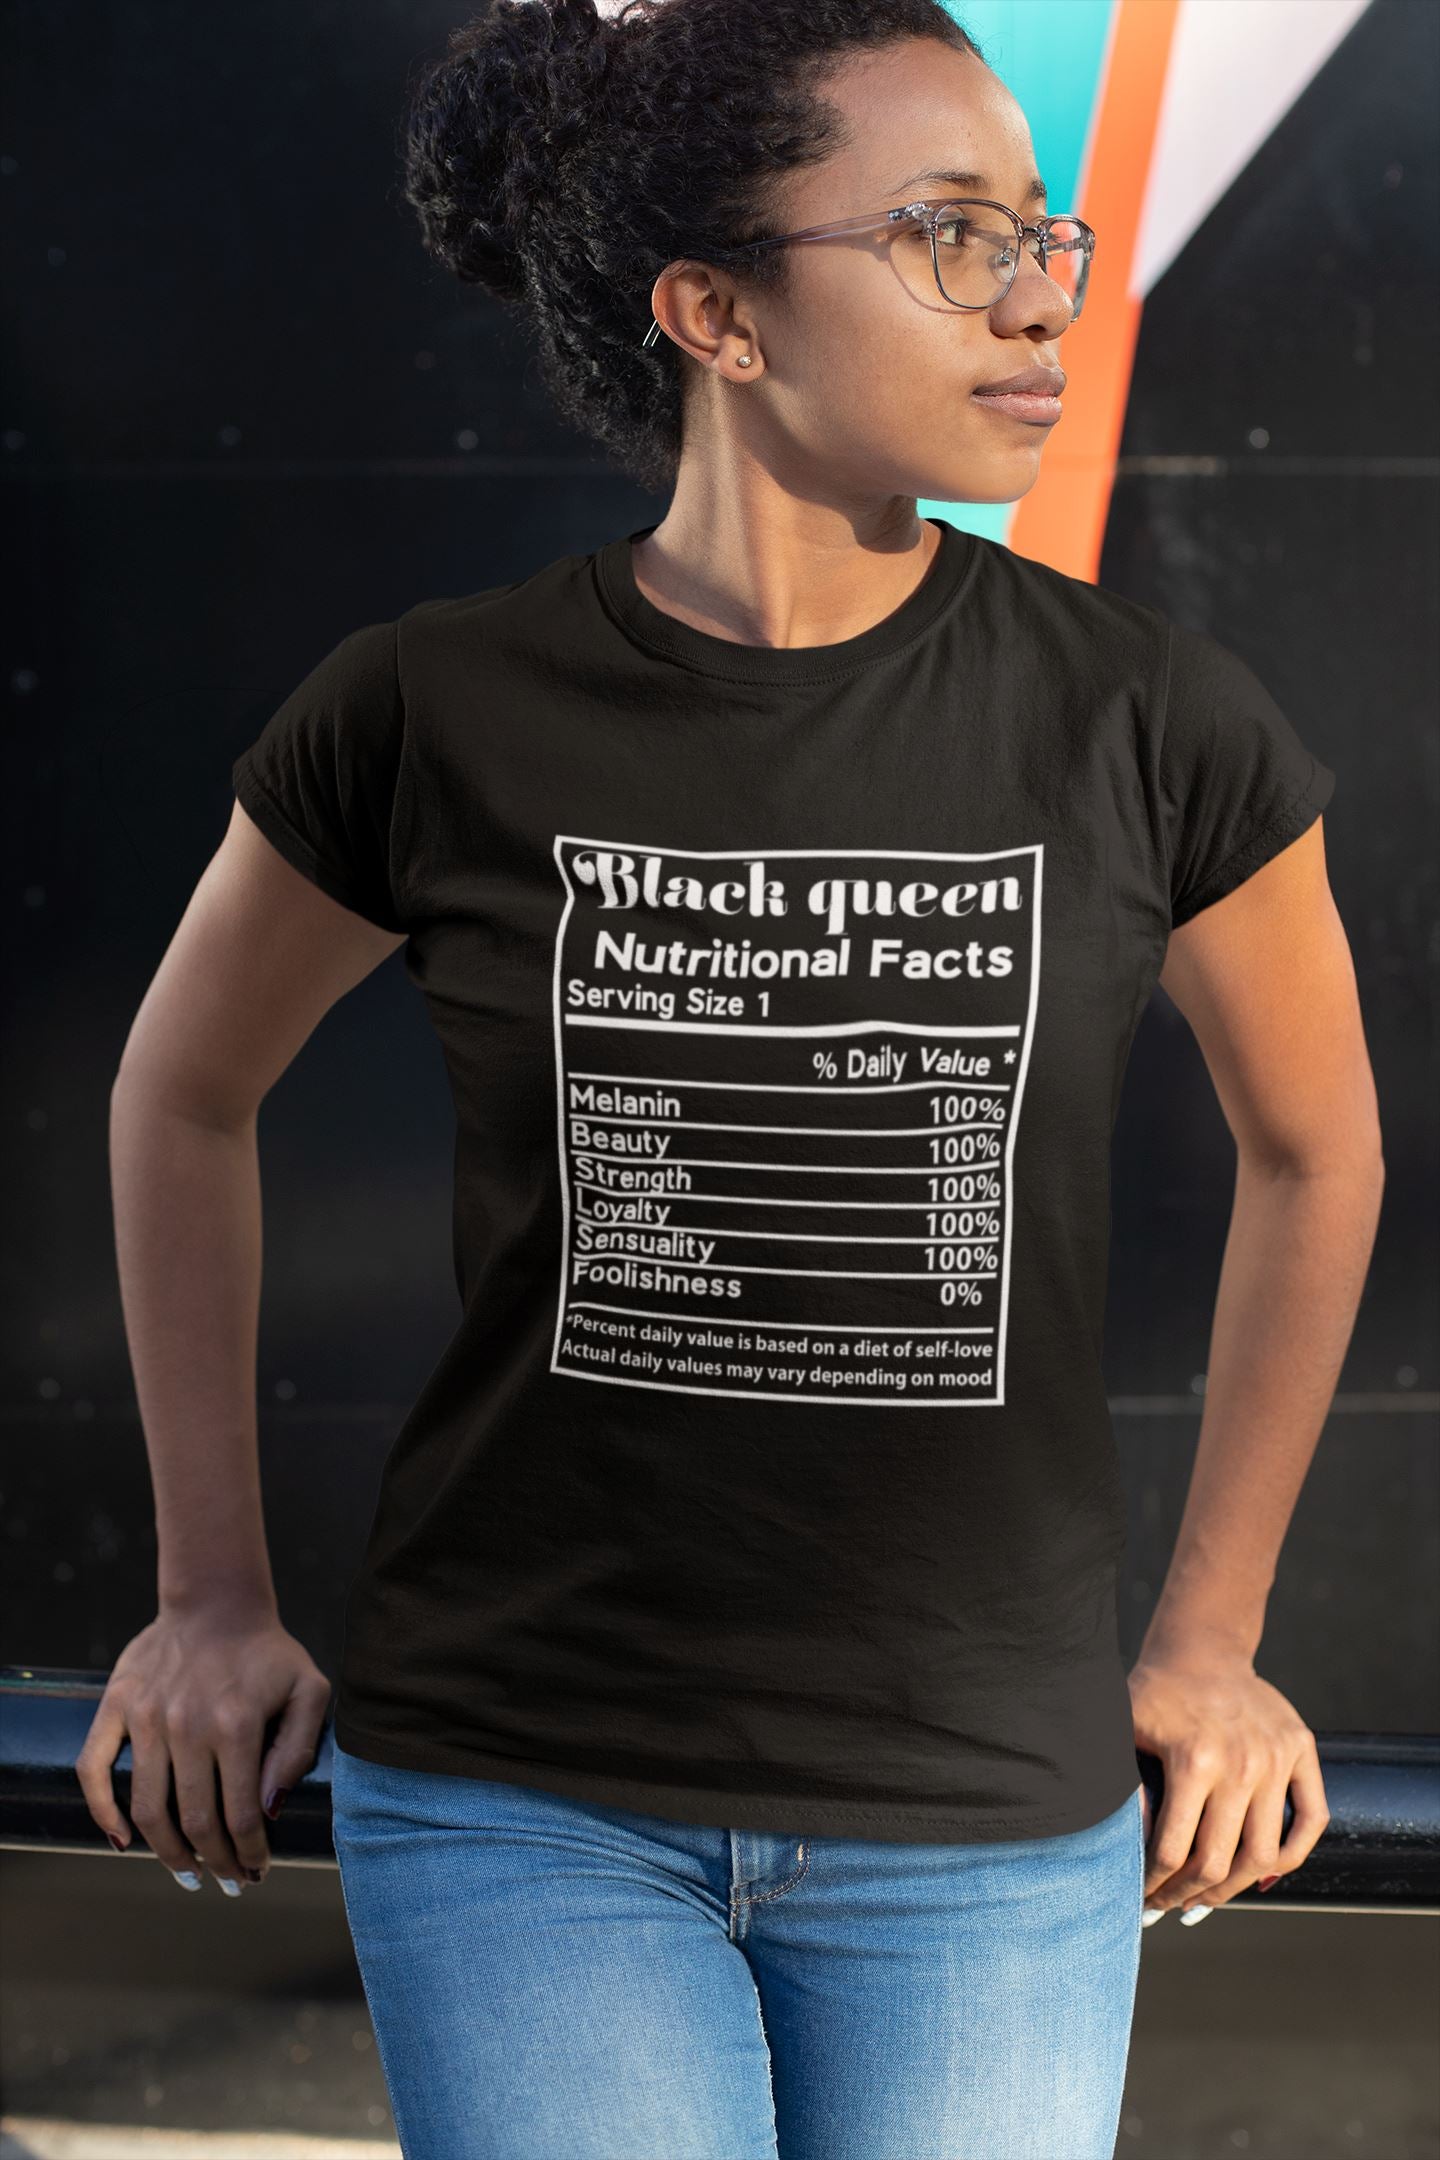 Black Queen Nutrition Facts T-shirt Apparel Gearment 